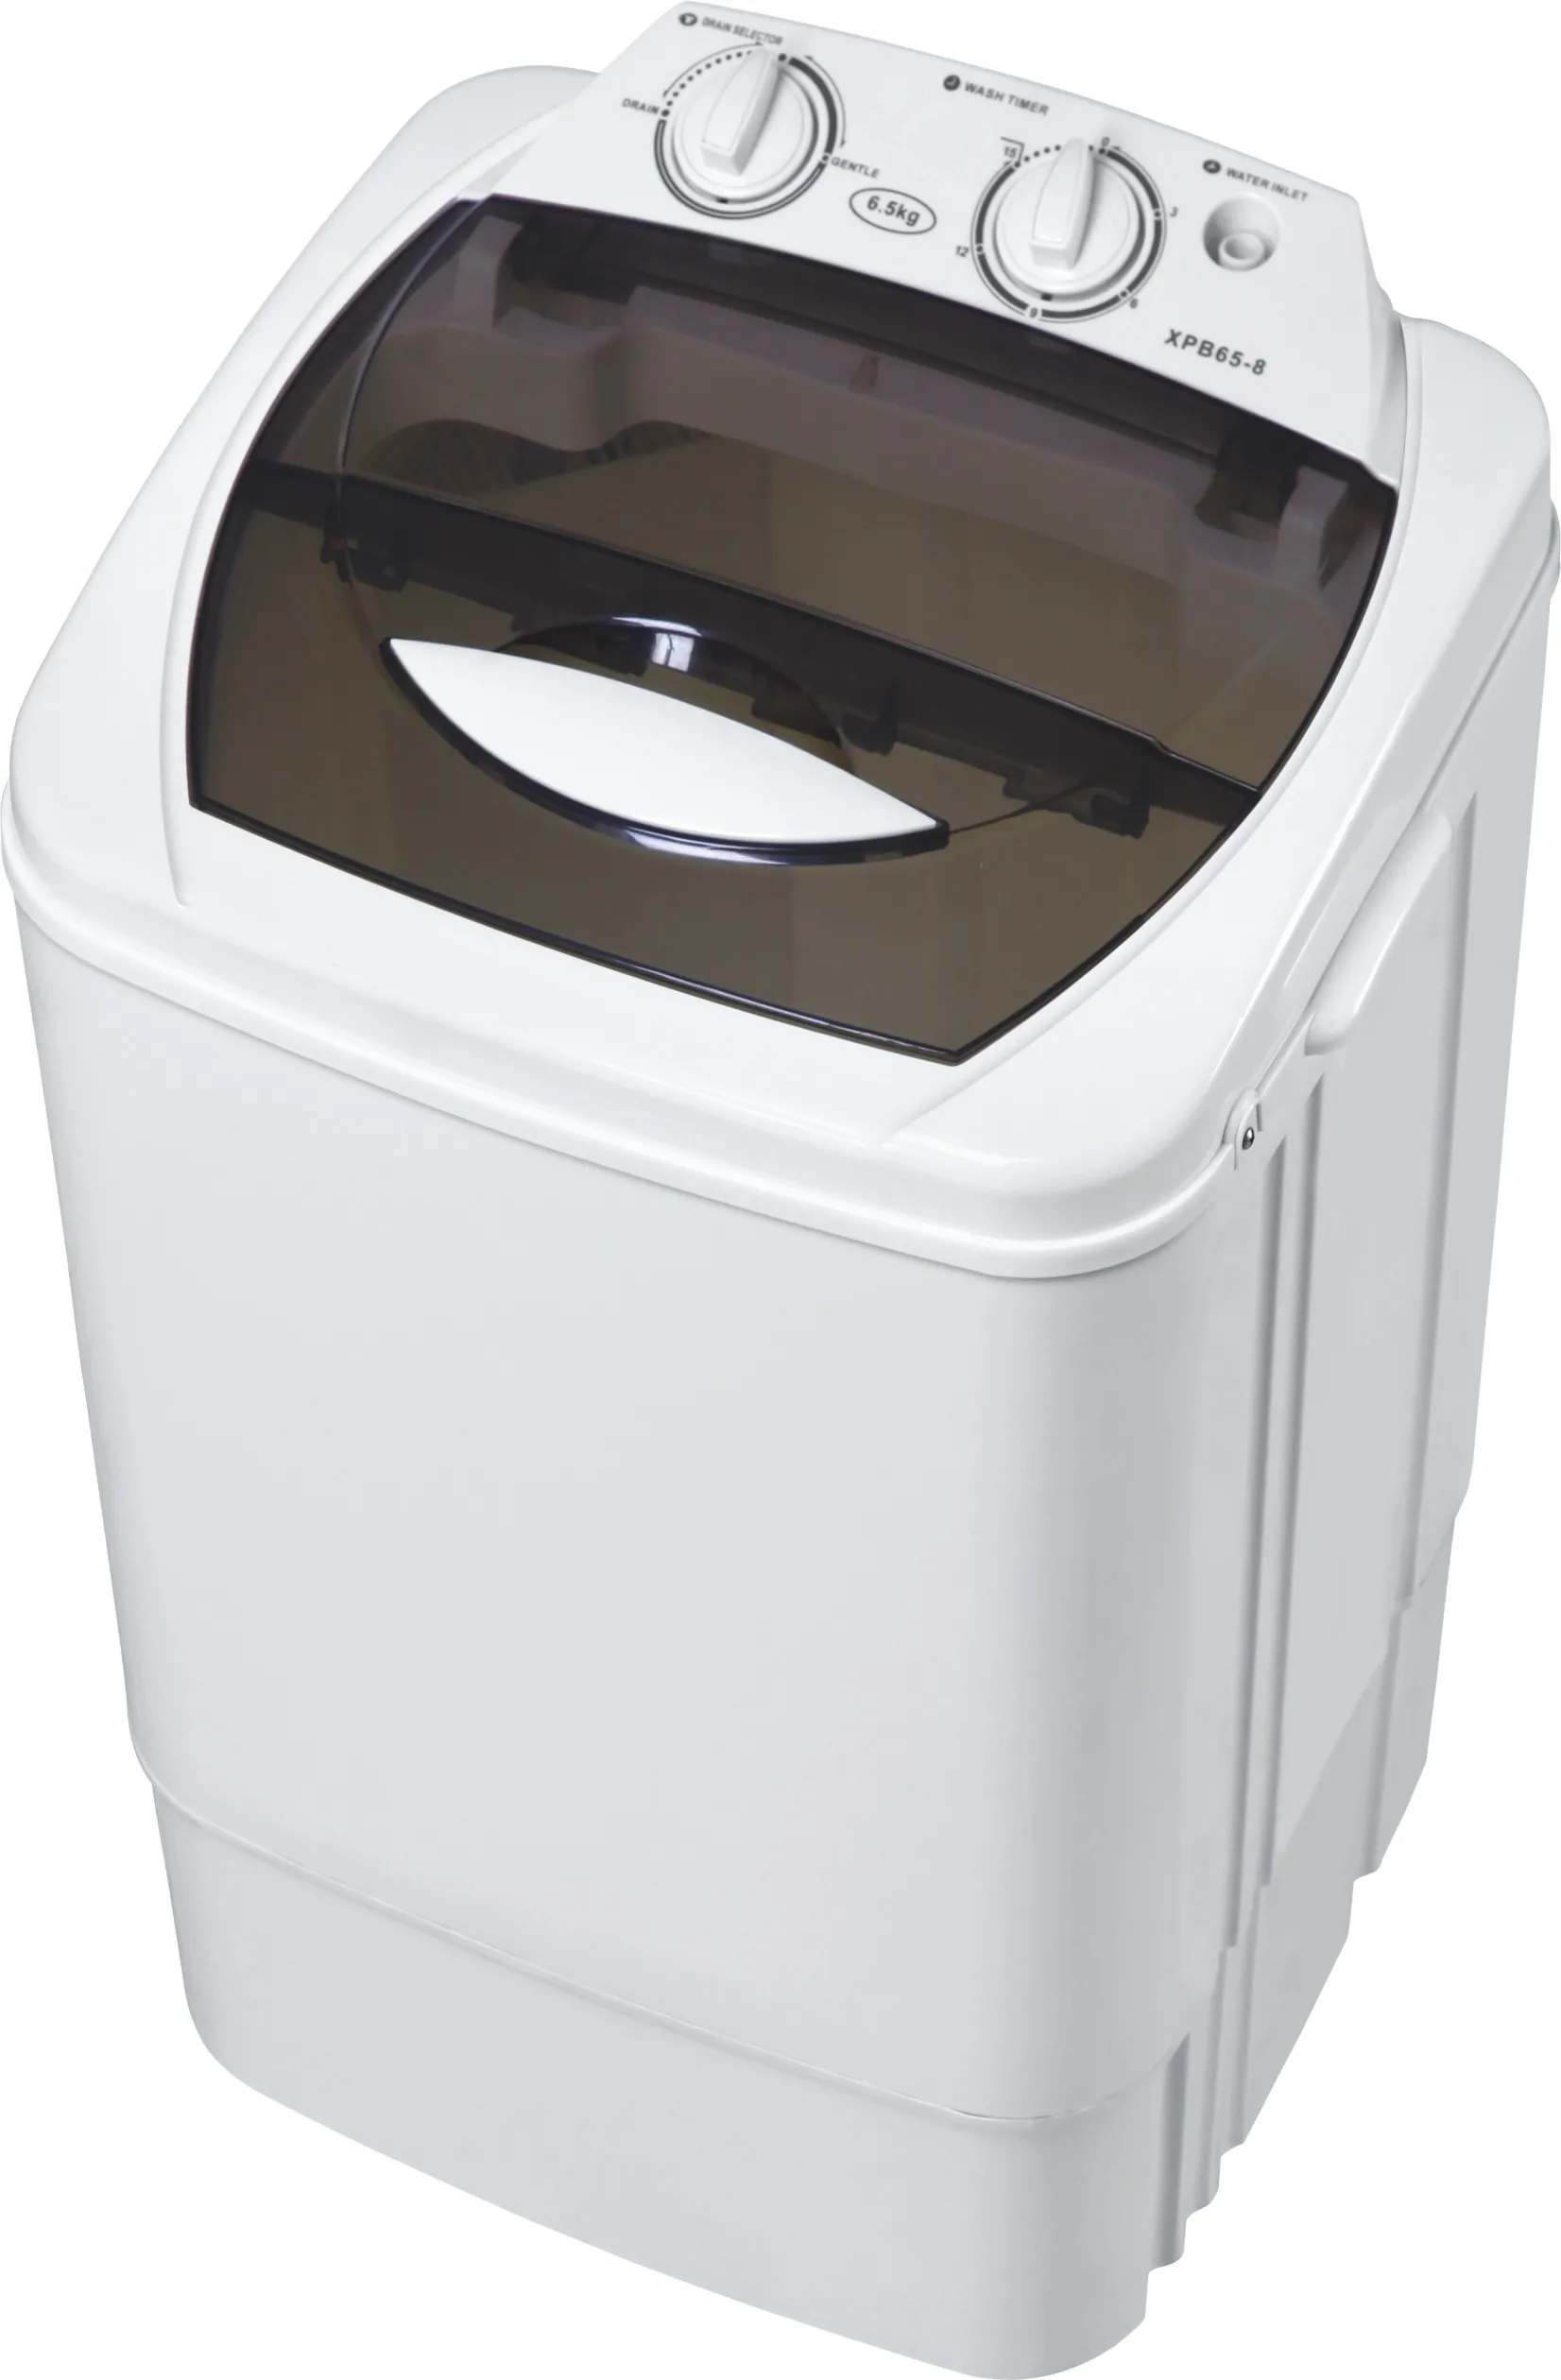 diplomat ipx4 washer dryer